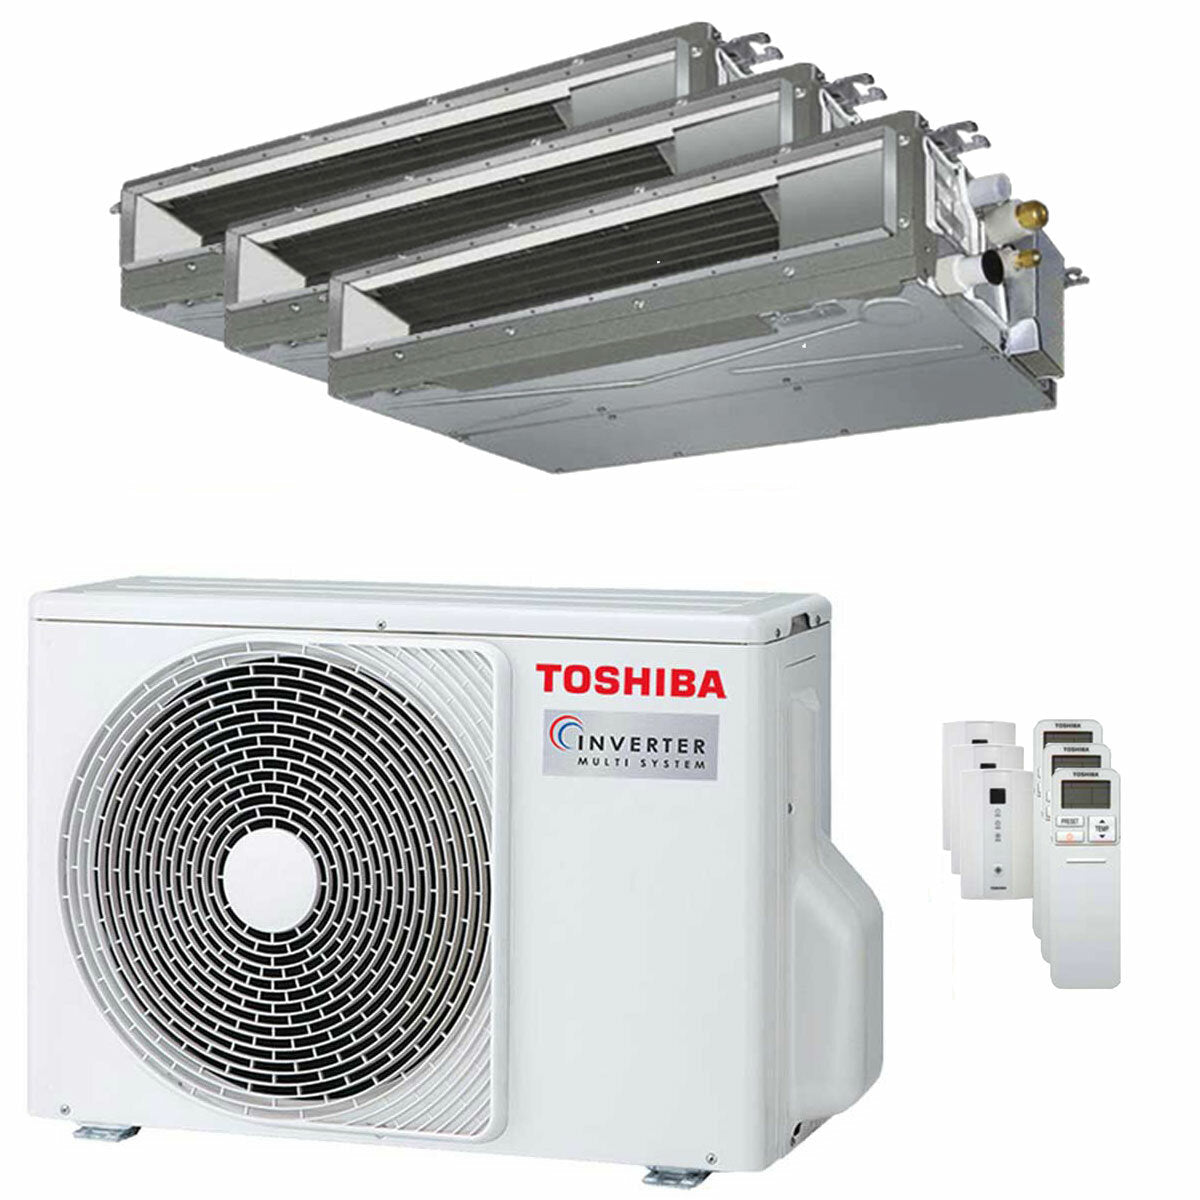 Toshiba ducted air conditioner U2 trial split 7000+9000+9000 BTU inverter A+++ external unit 5.2 kW